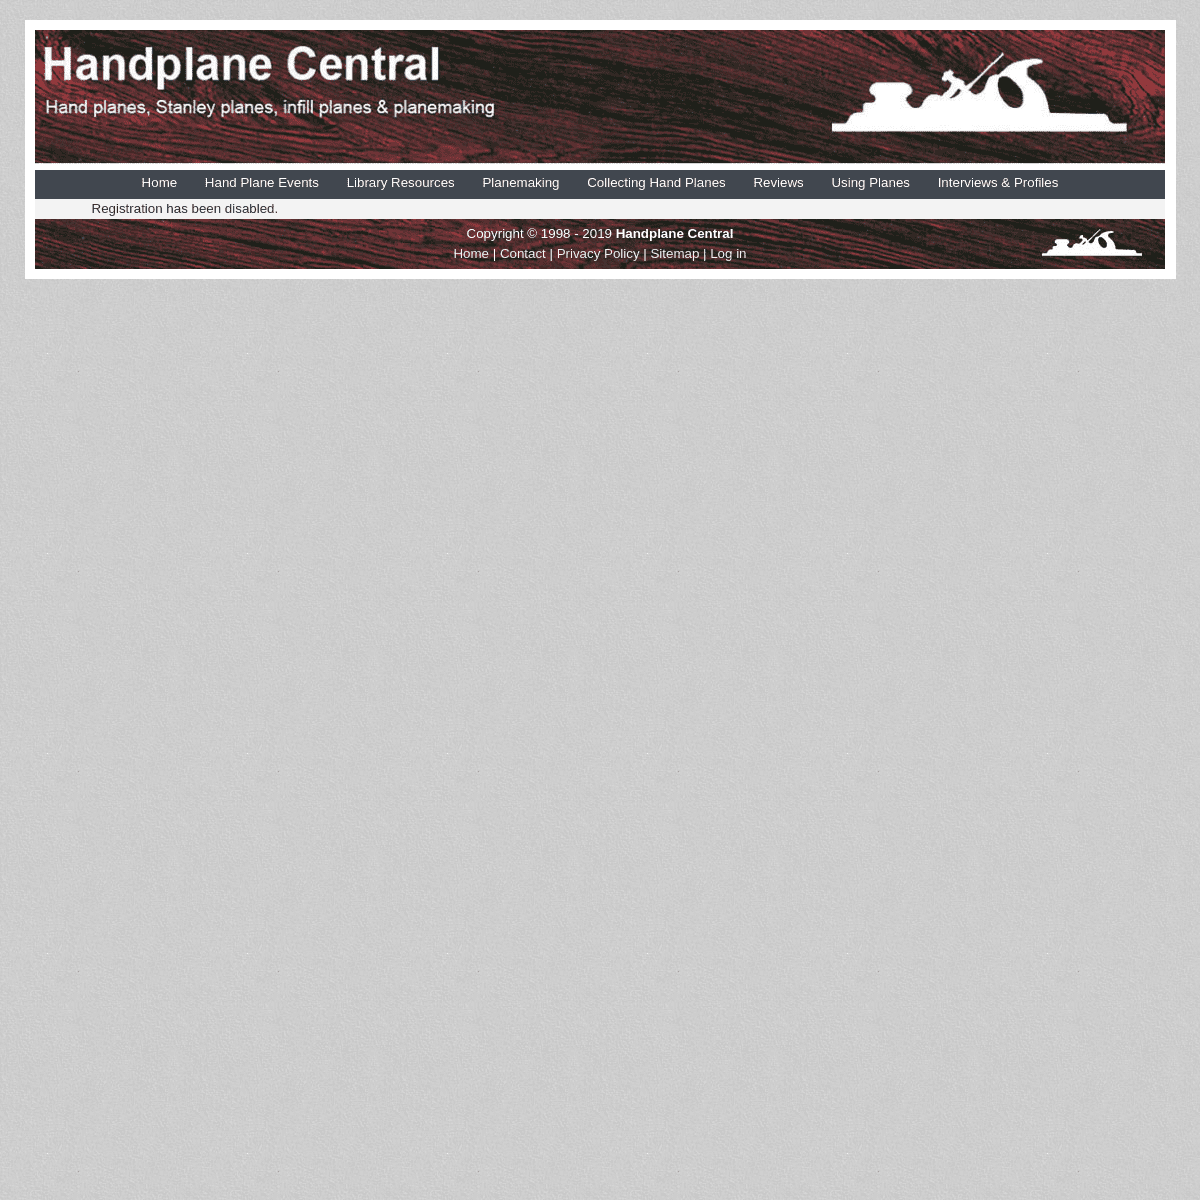 A complete backup of handplane.com